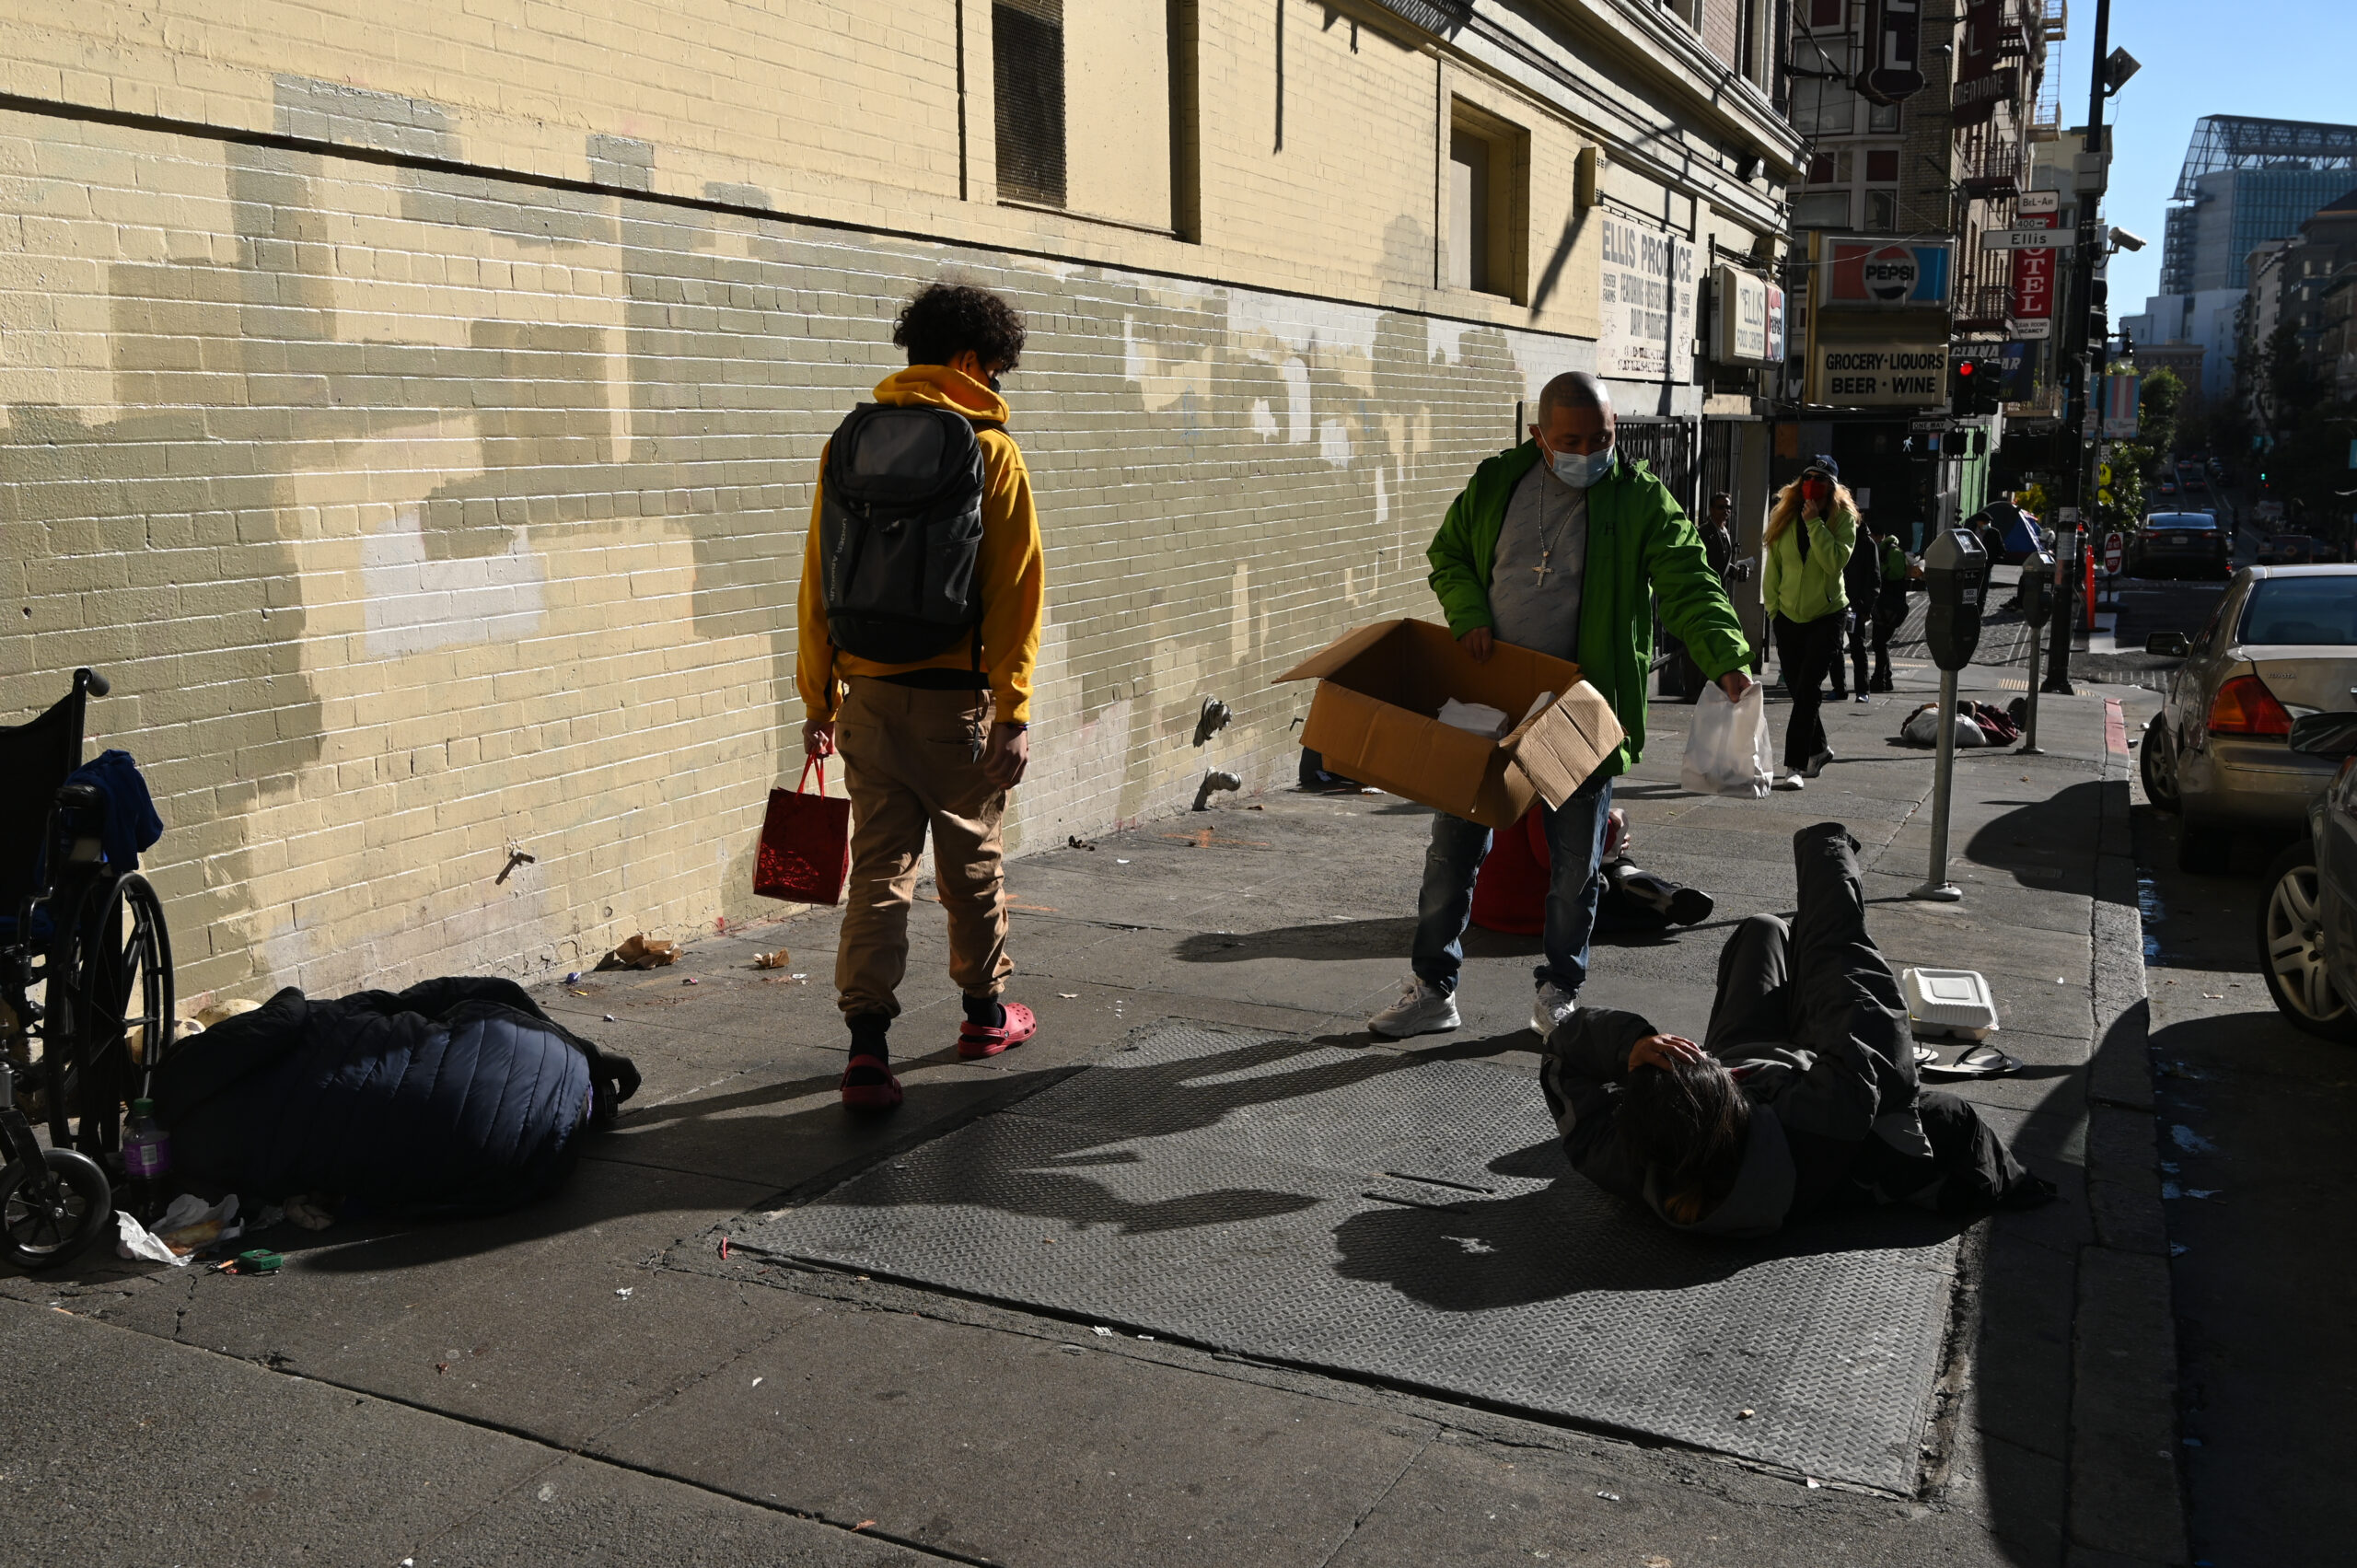 people walking past others lying on the sidewalk.